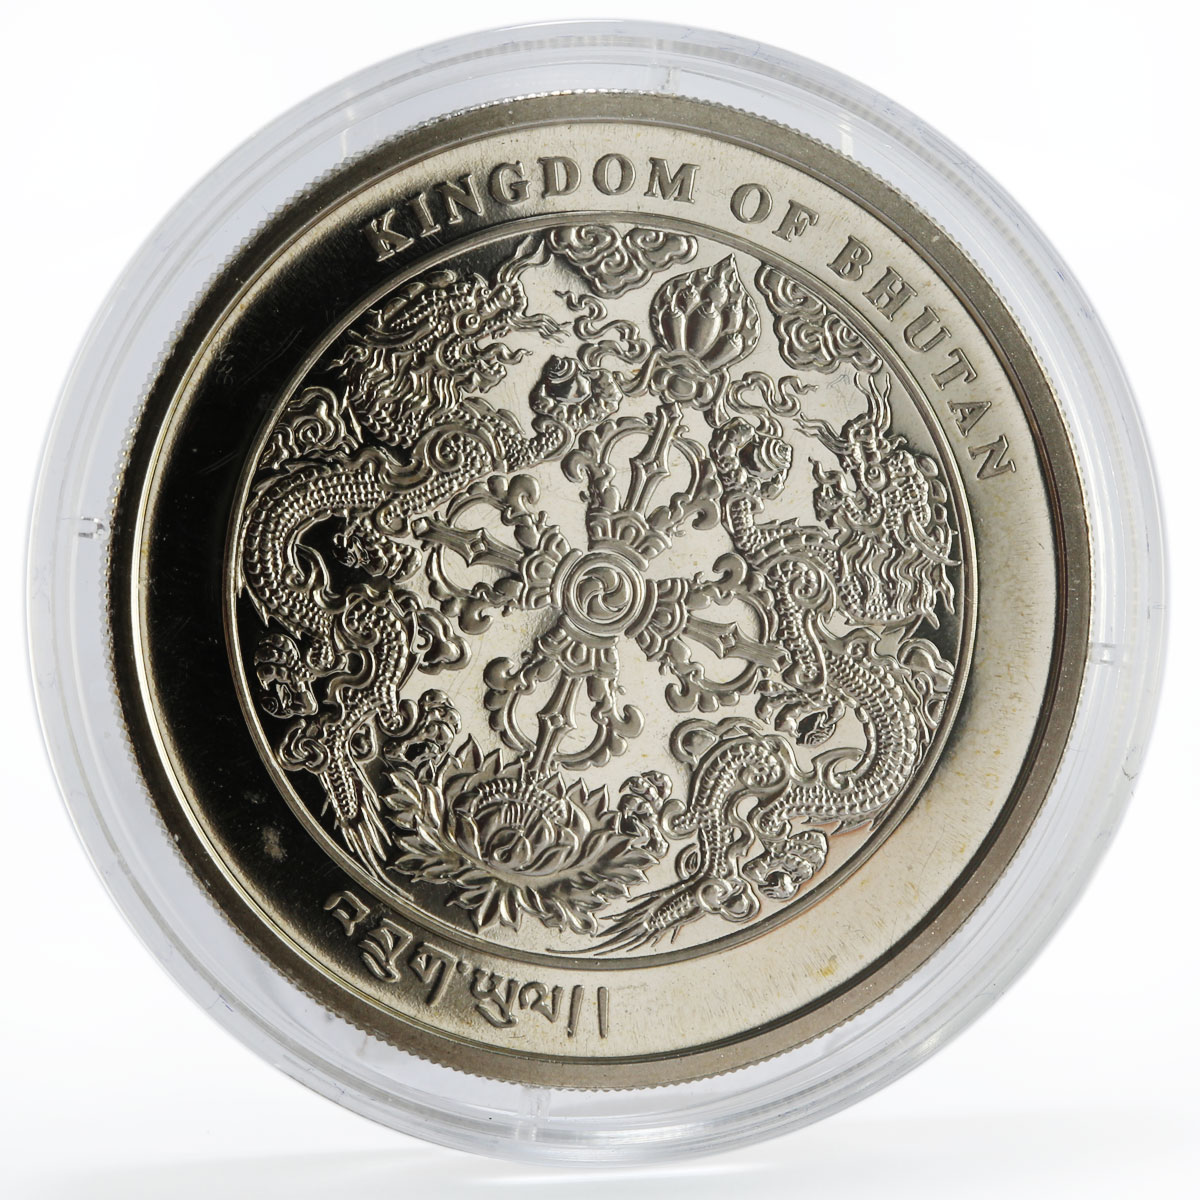 Bhutan 100 ngultrums Coronation of King Jigme Khesar Namgyel silver coin 2008